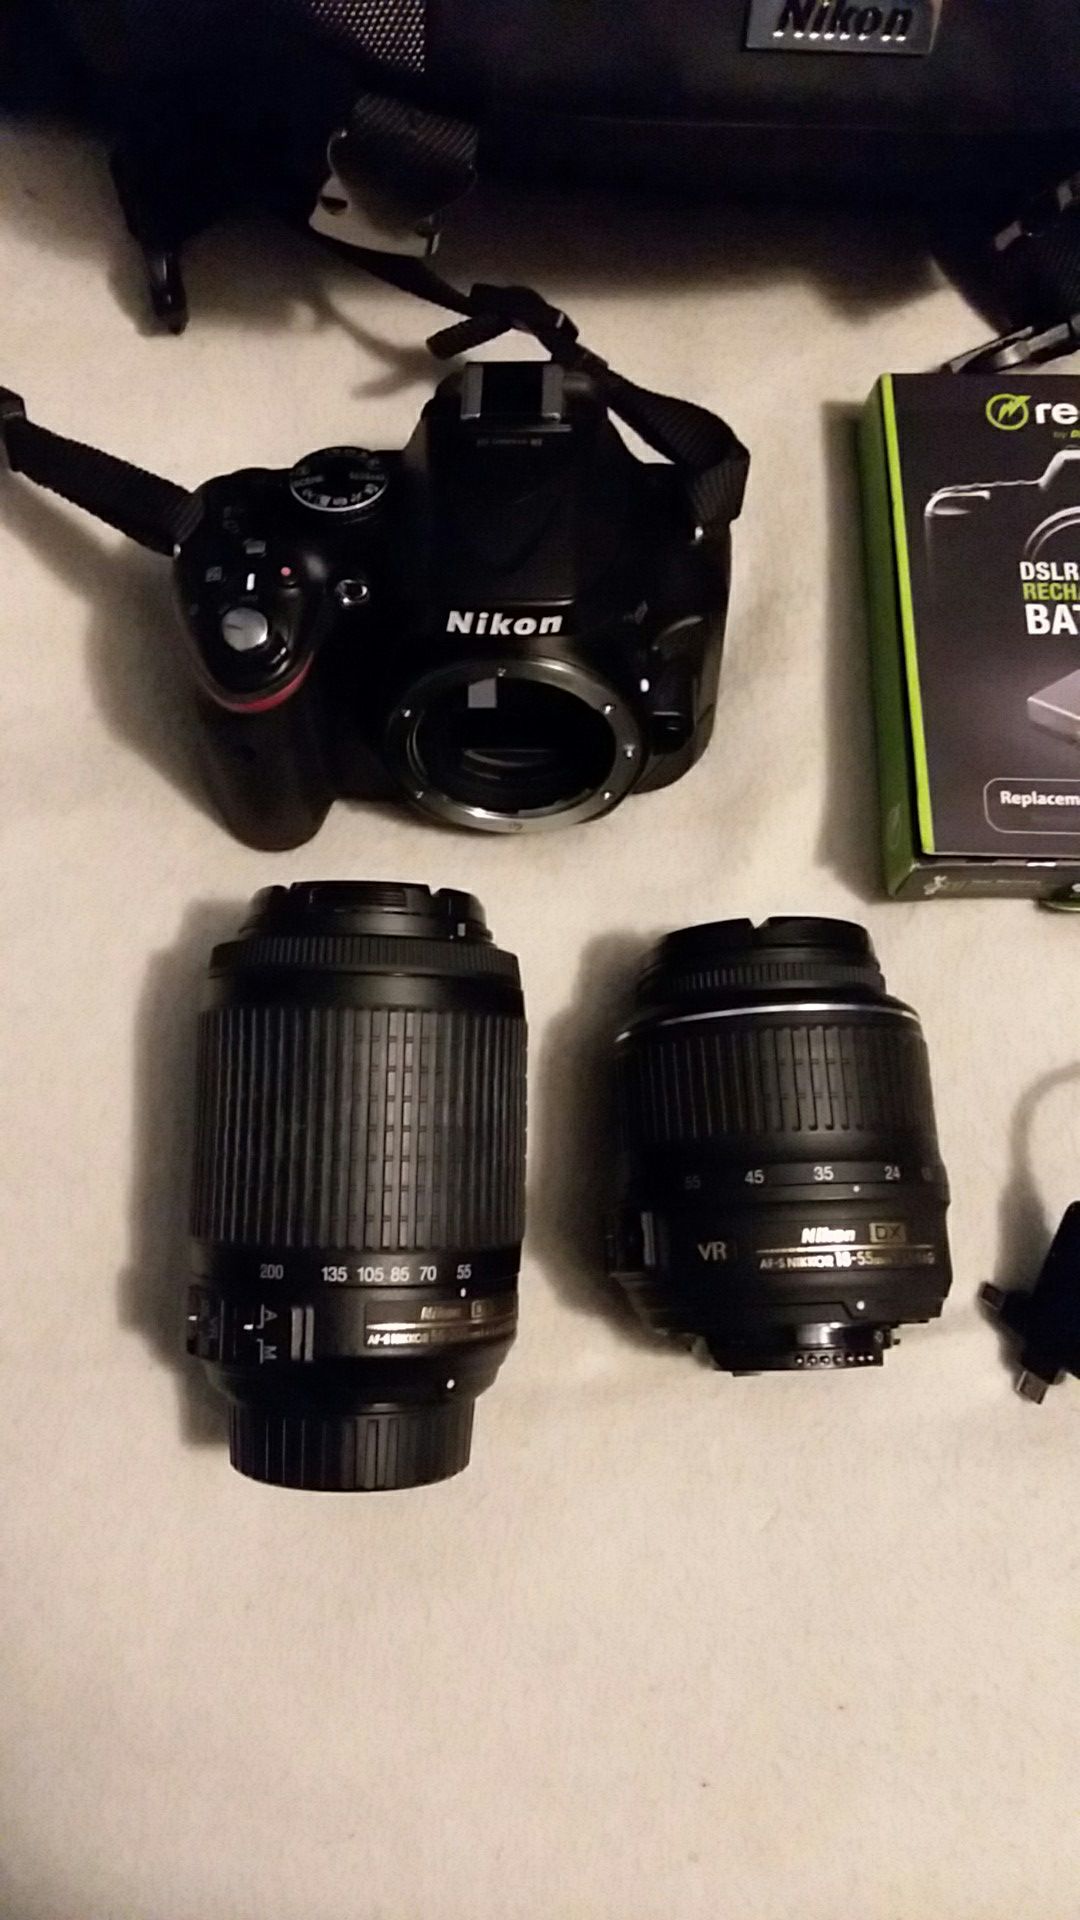 Nikon D5200 Digital Camera, Includes 2 Lenses, Nikon Bag, New charger & Battery